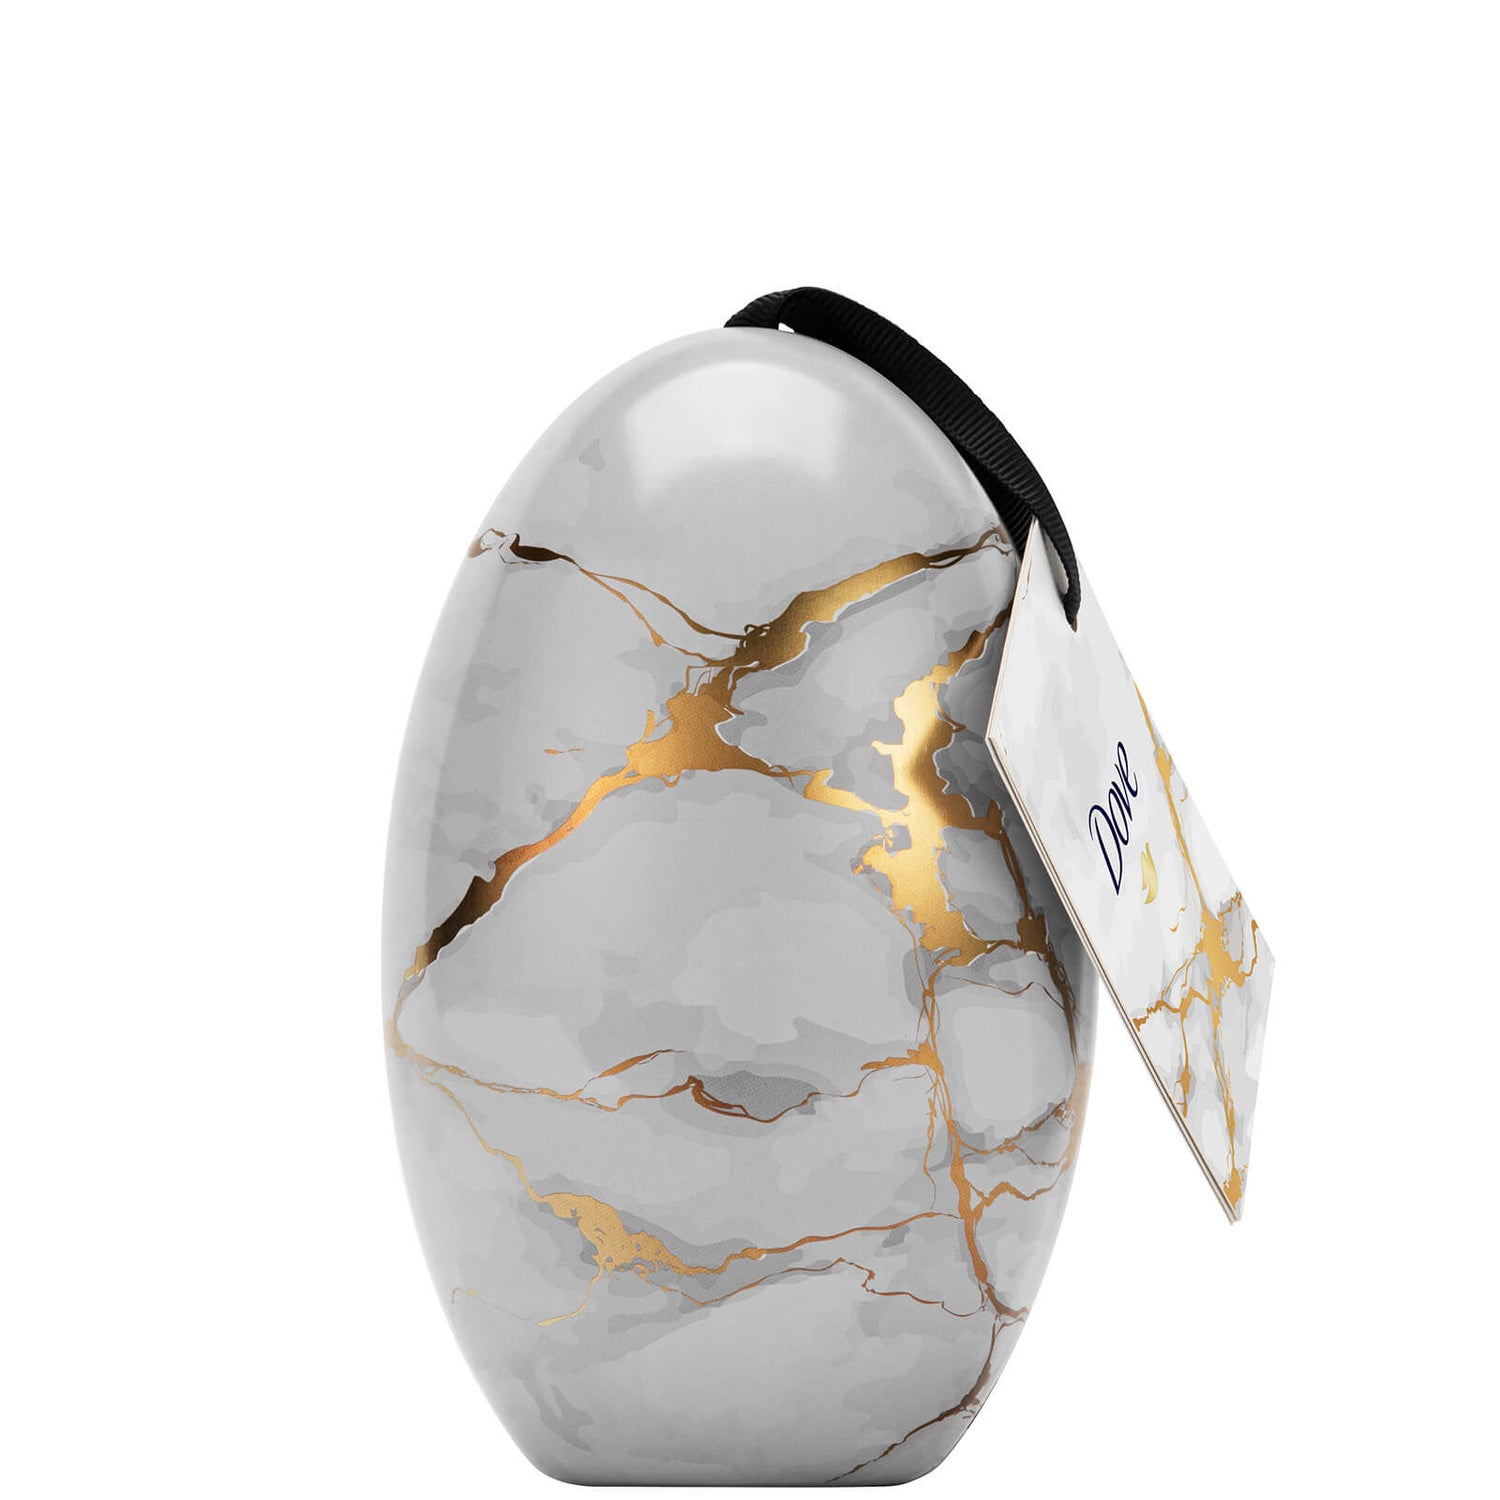 Dove Hand & Body Treats Gift Egg